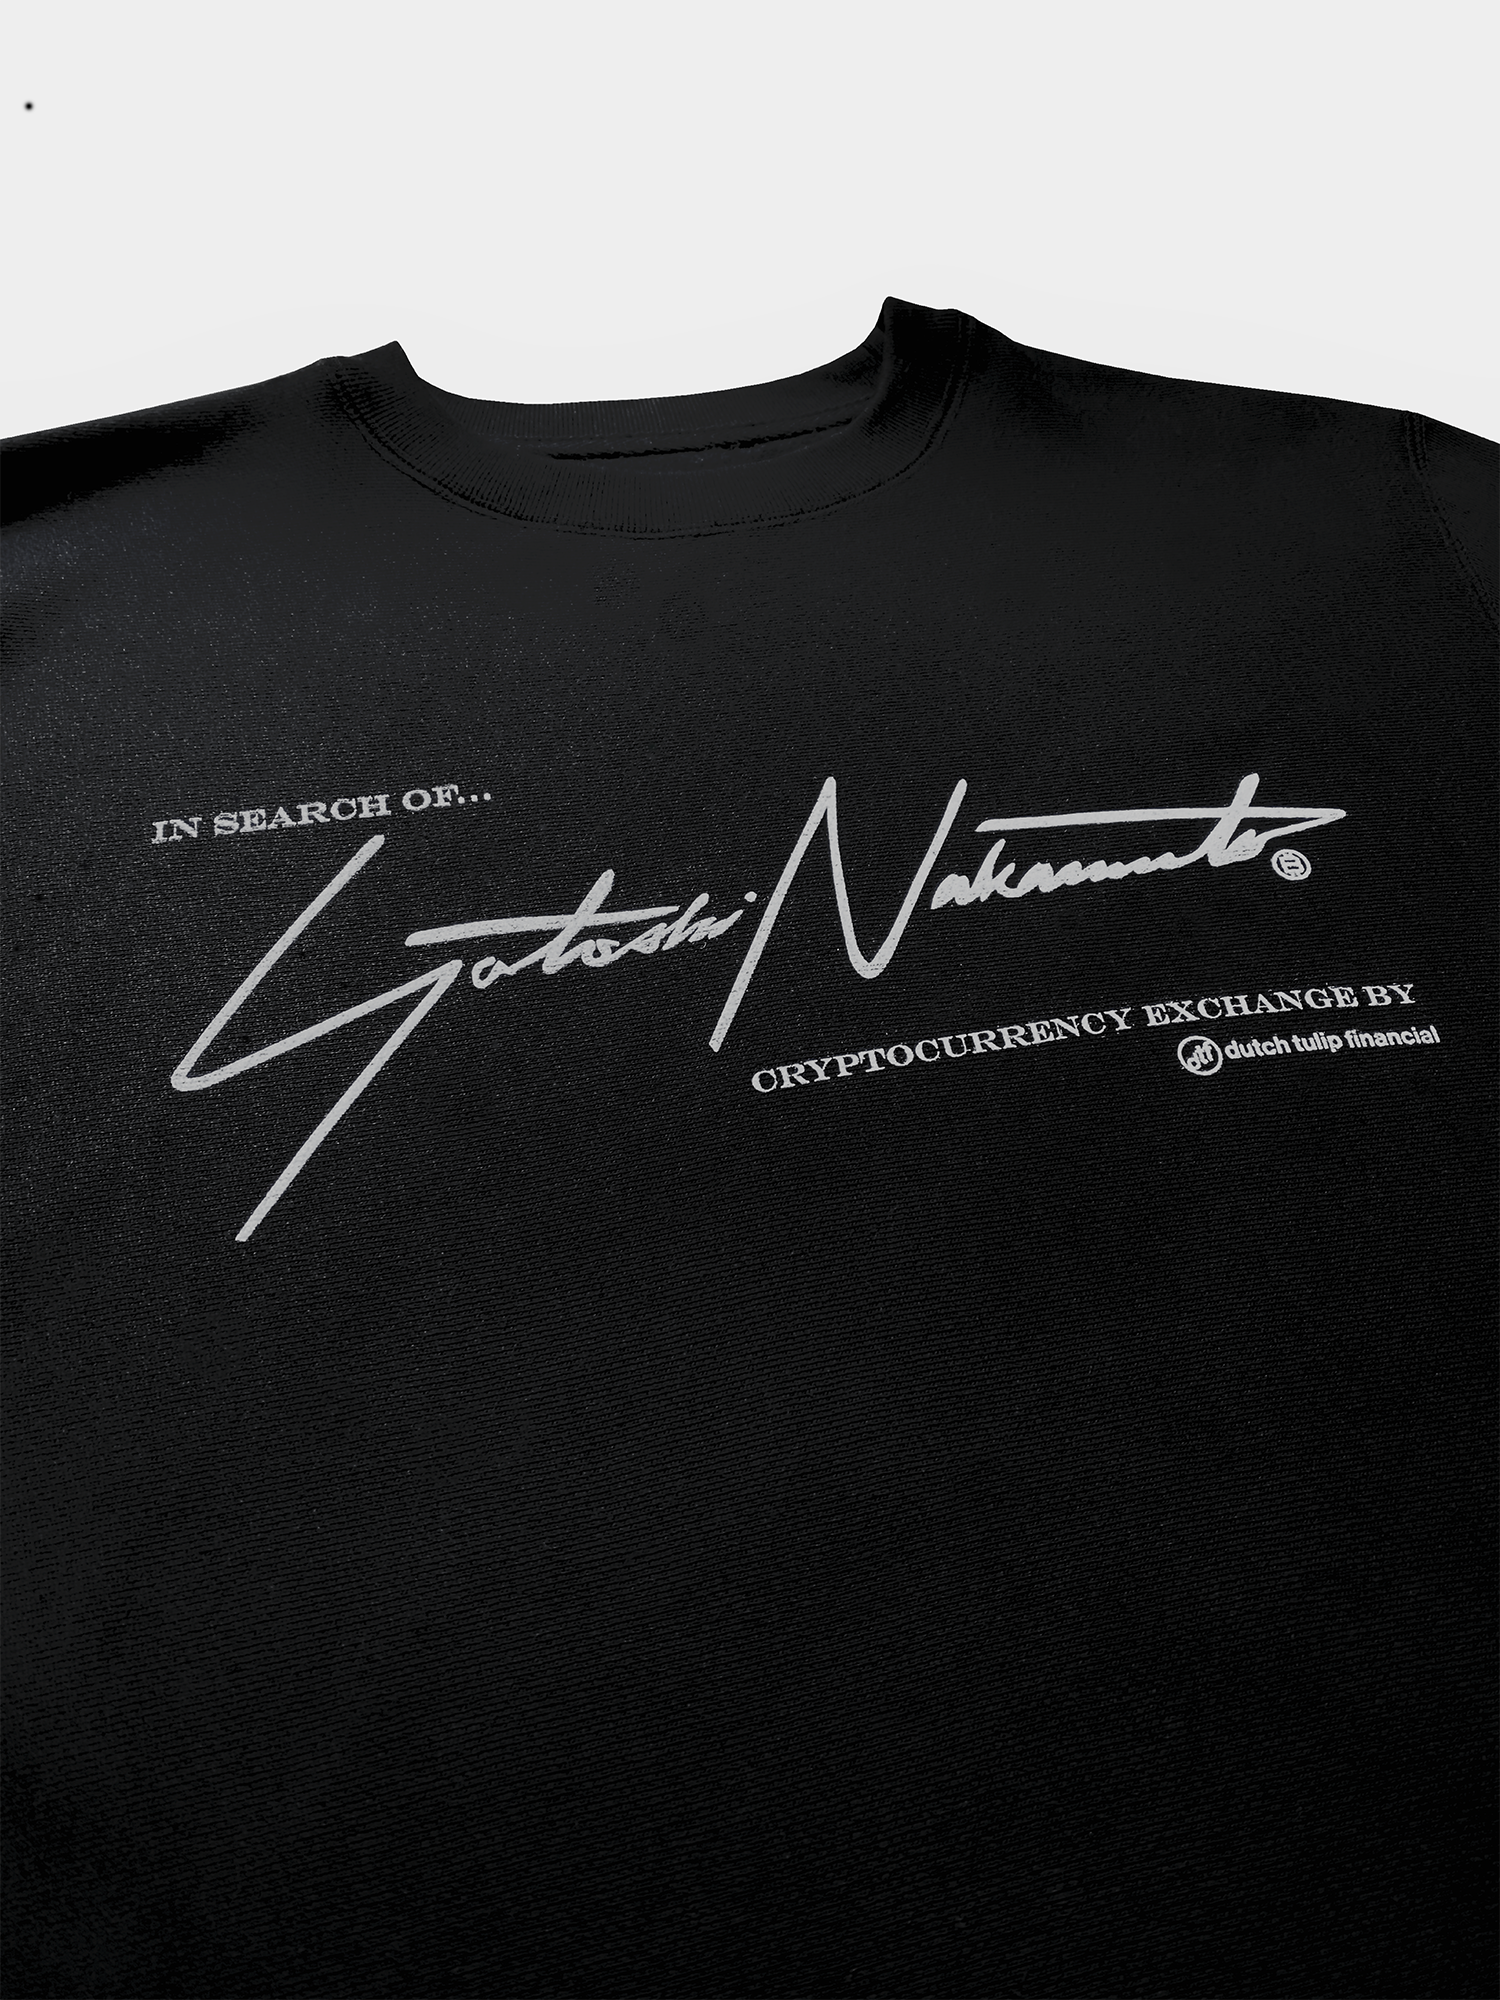 Satoshi Nakamoto Sweatshirt - Black